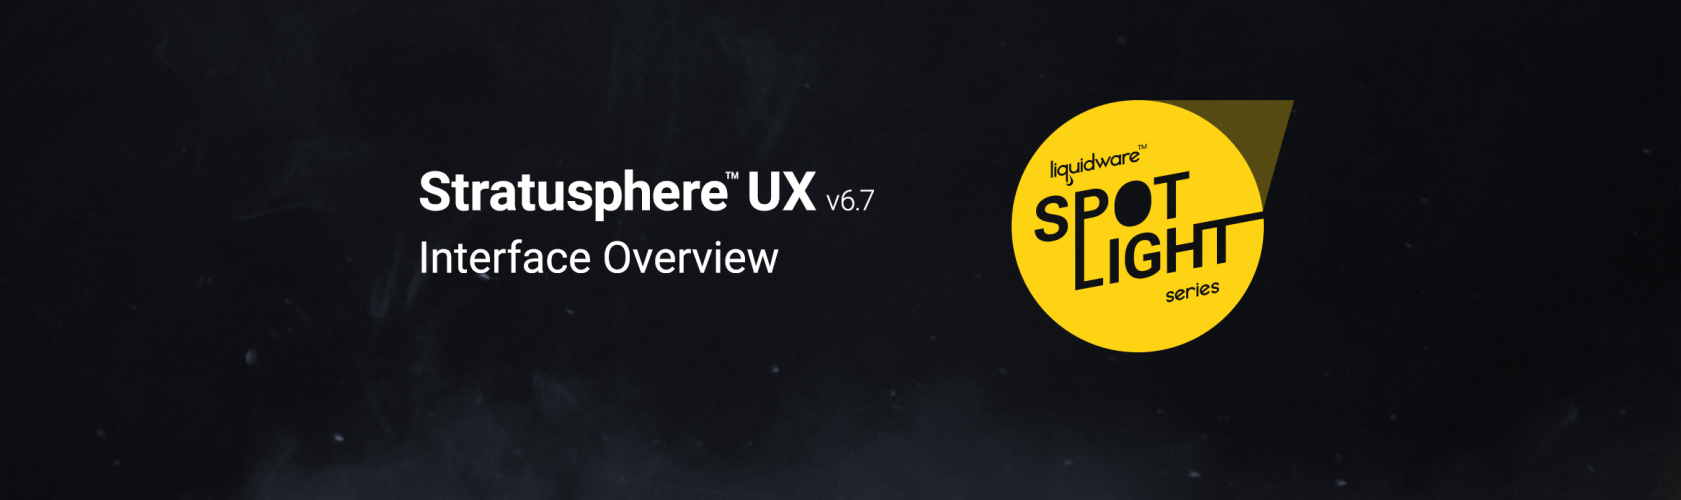 Spotlight Series: Stratusphere UX v6.7 — Interface Overview